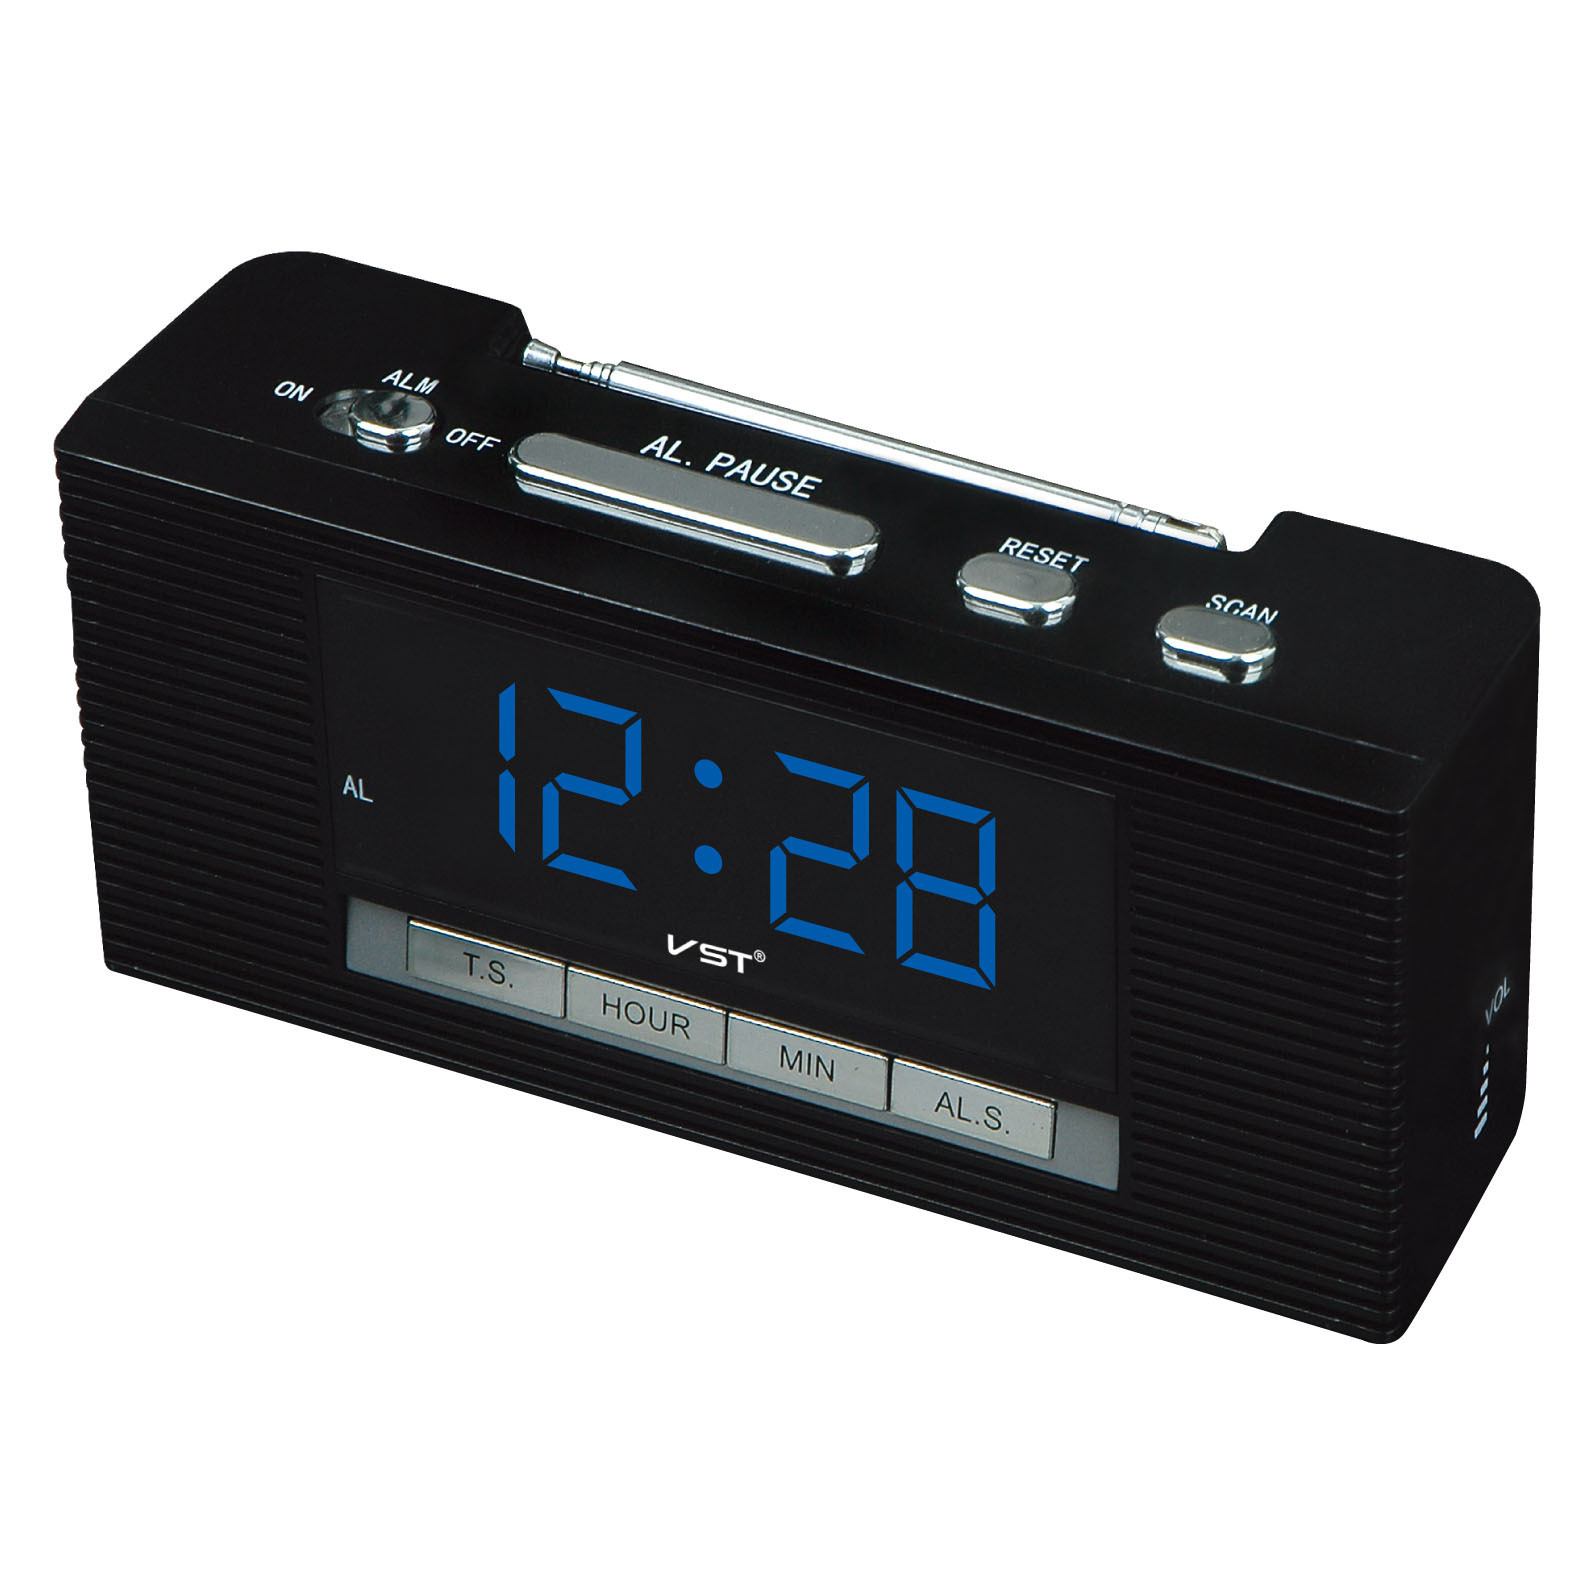 LED Clock FM Radio Alarm Clock Night Watch Electronic Table Digital Watches Luminova Bedroom Home Decor Best For Gift